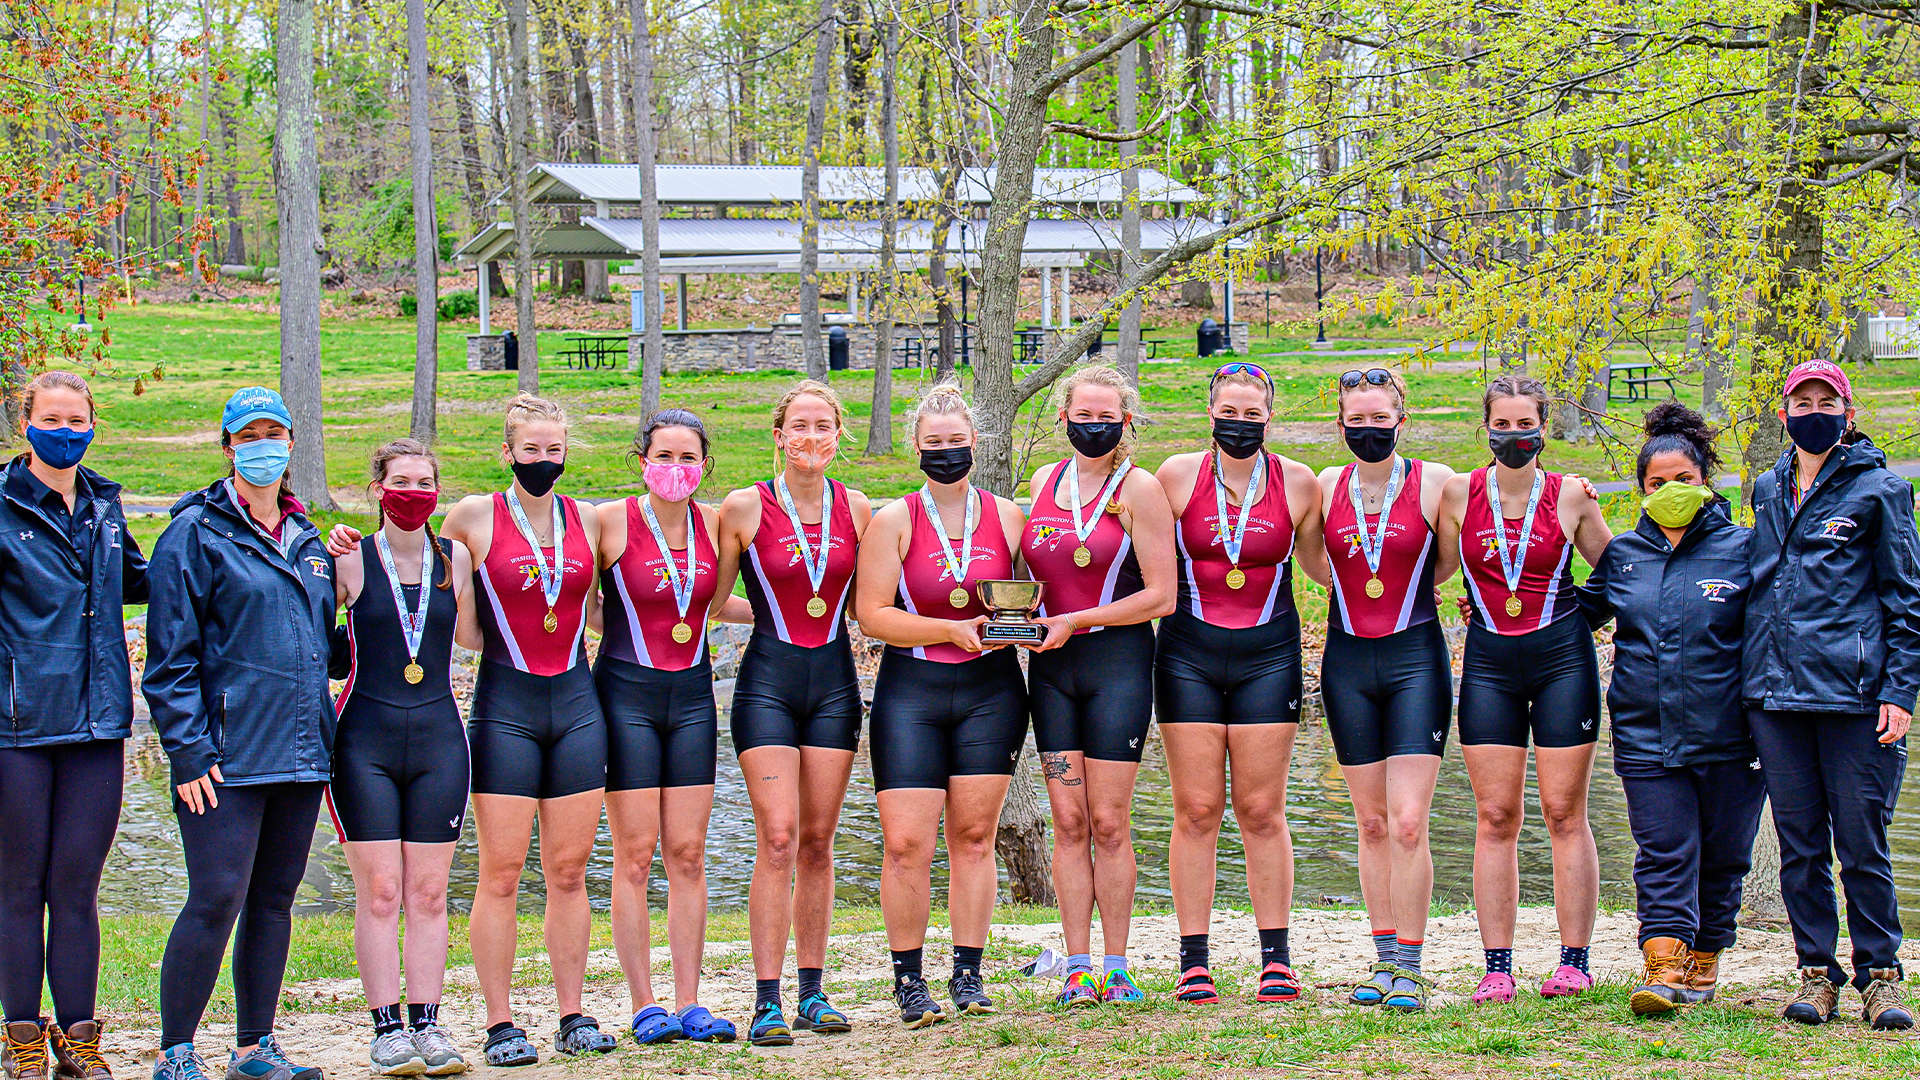 Women's Rowing team winning a prize